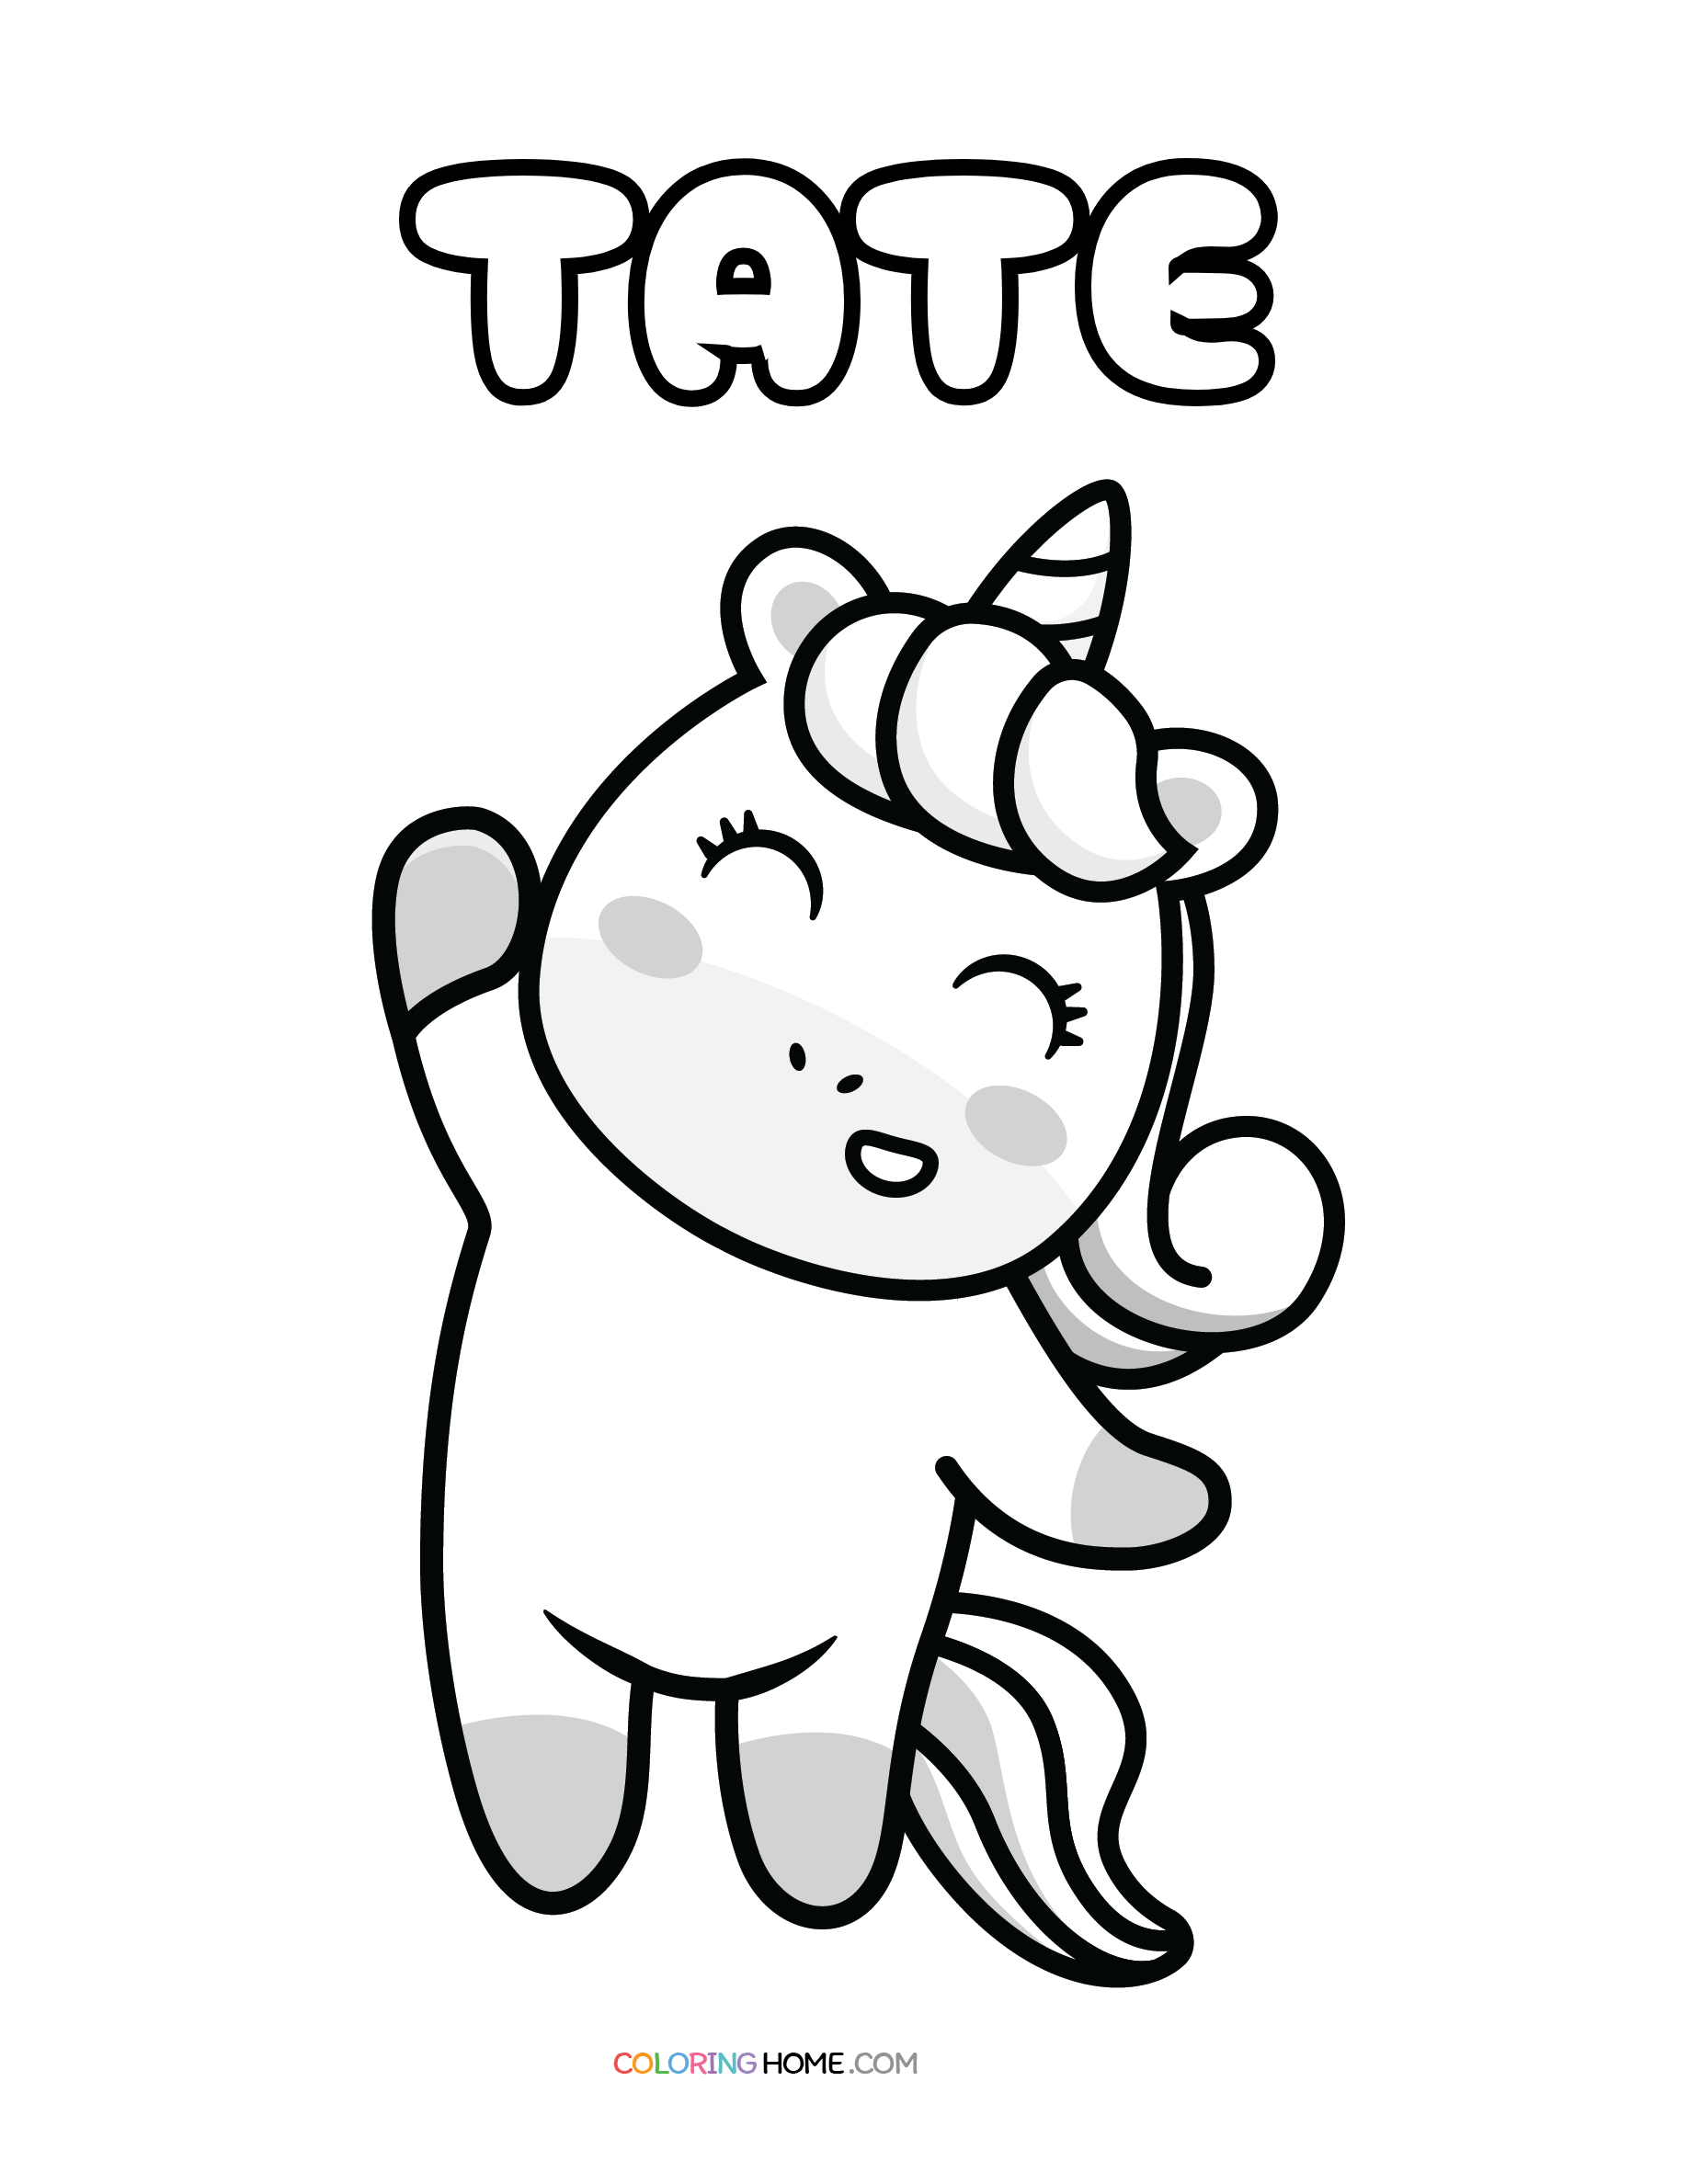 Tate unicorn coloring page